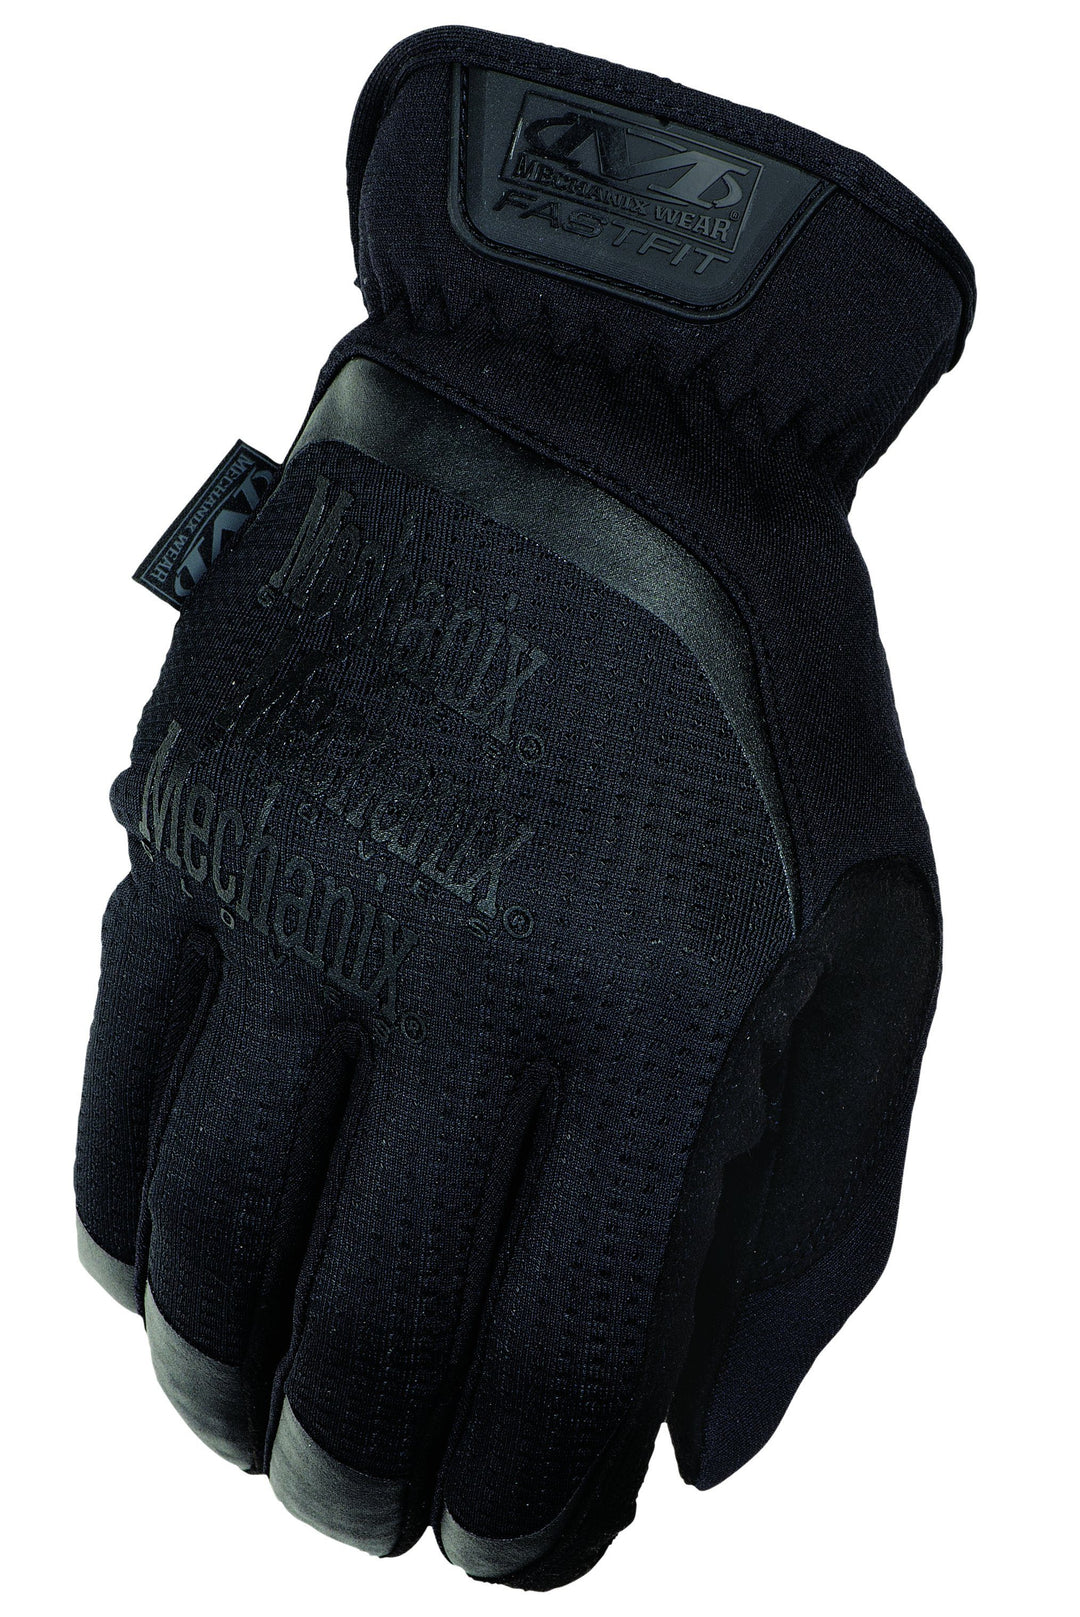 Apparel - Hands - Gloves - Mechanix FastFit Tactical/Work Gloves Covert FFTAB-55